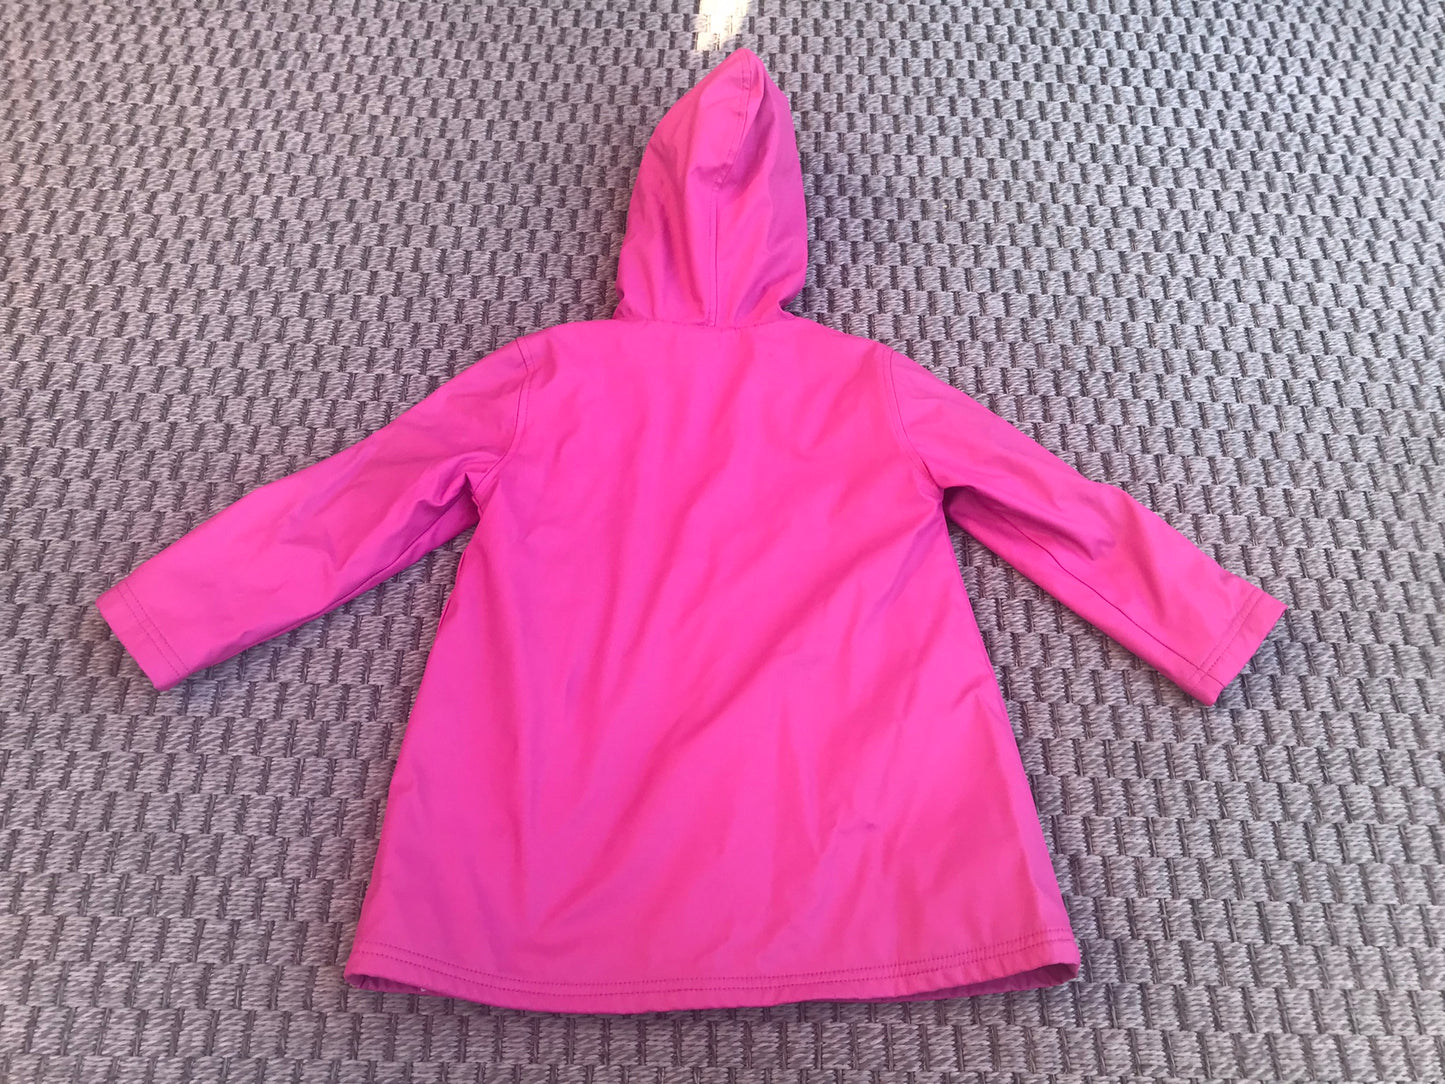 Rain Coat Child Size 5 Hatley Fushia Pink and Navy